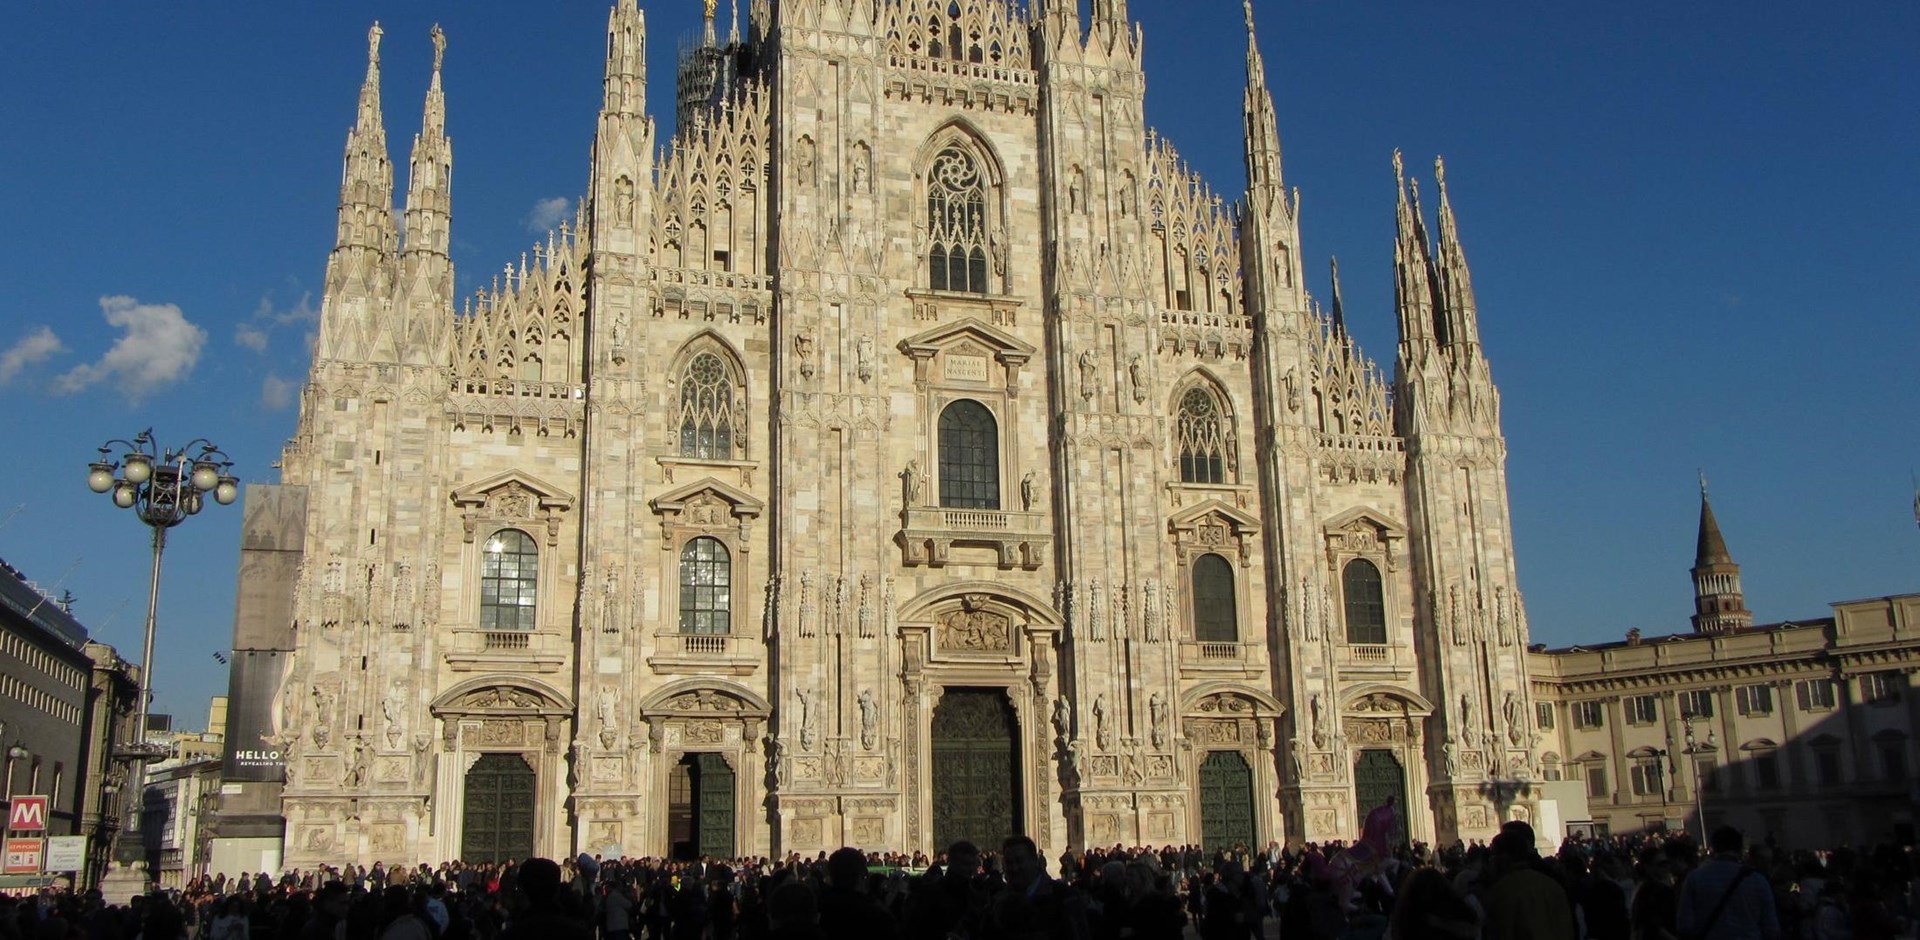 000704 Milan Duomo_Italy 001_Pixabay _cathedral-111040_no credit_no model release-Hybris